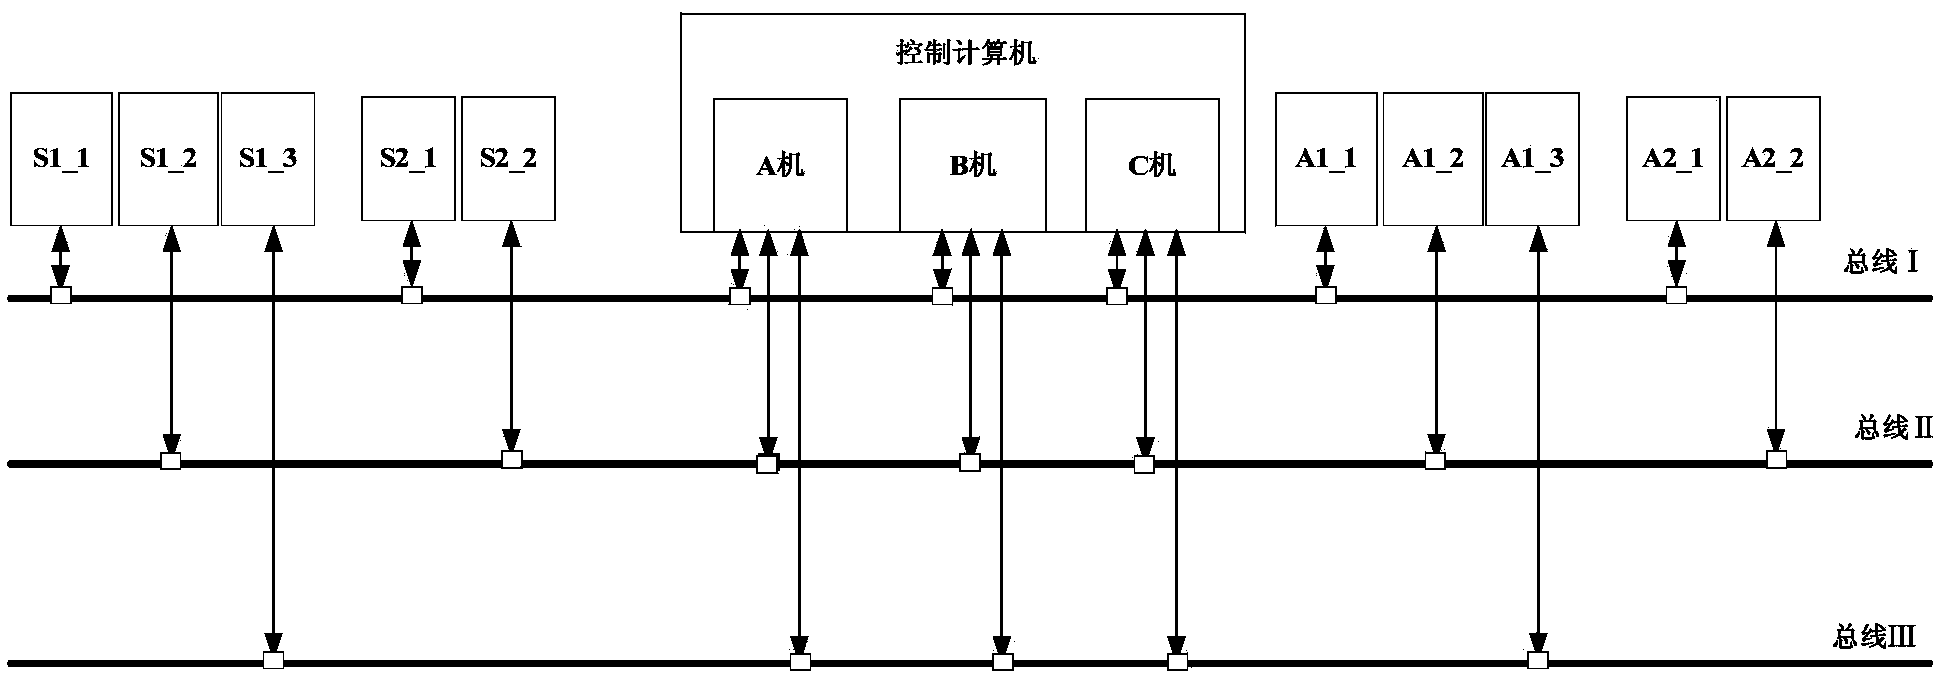 Triple-redundancy control computer and fault-tolerant control system